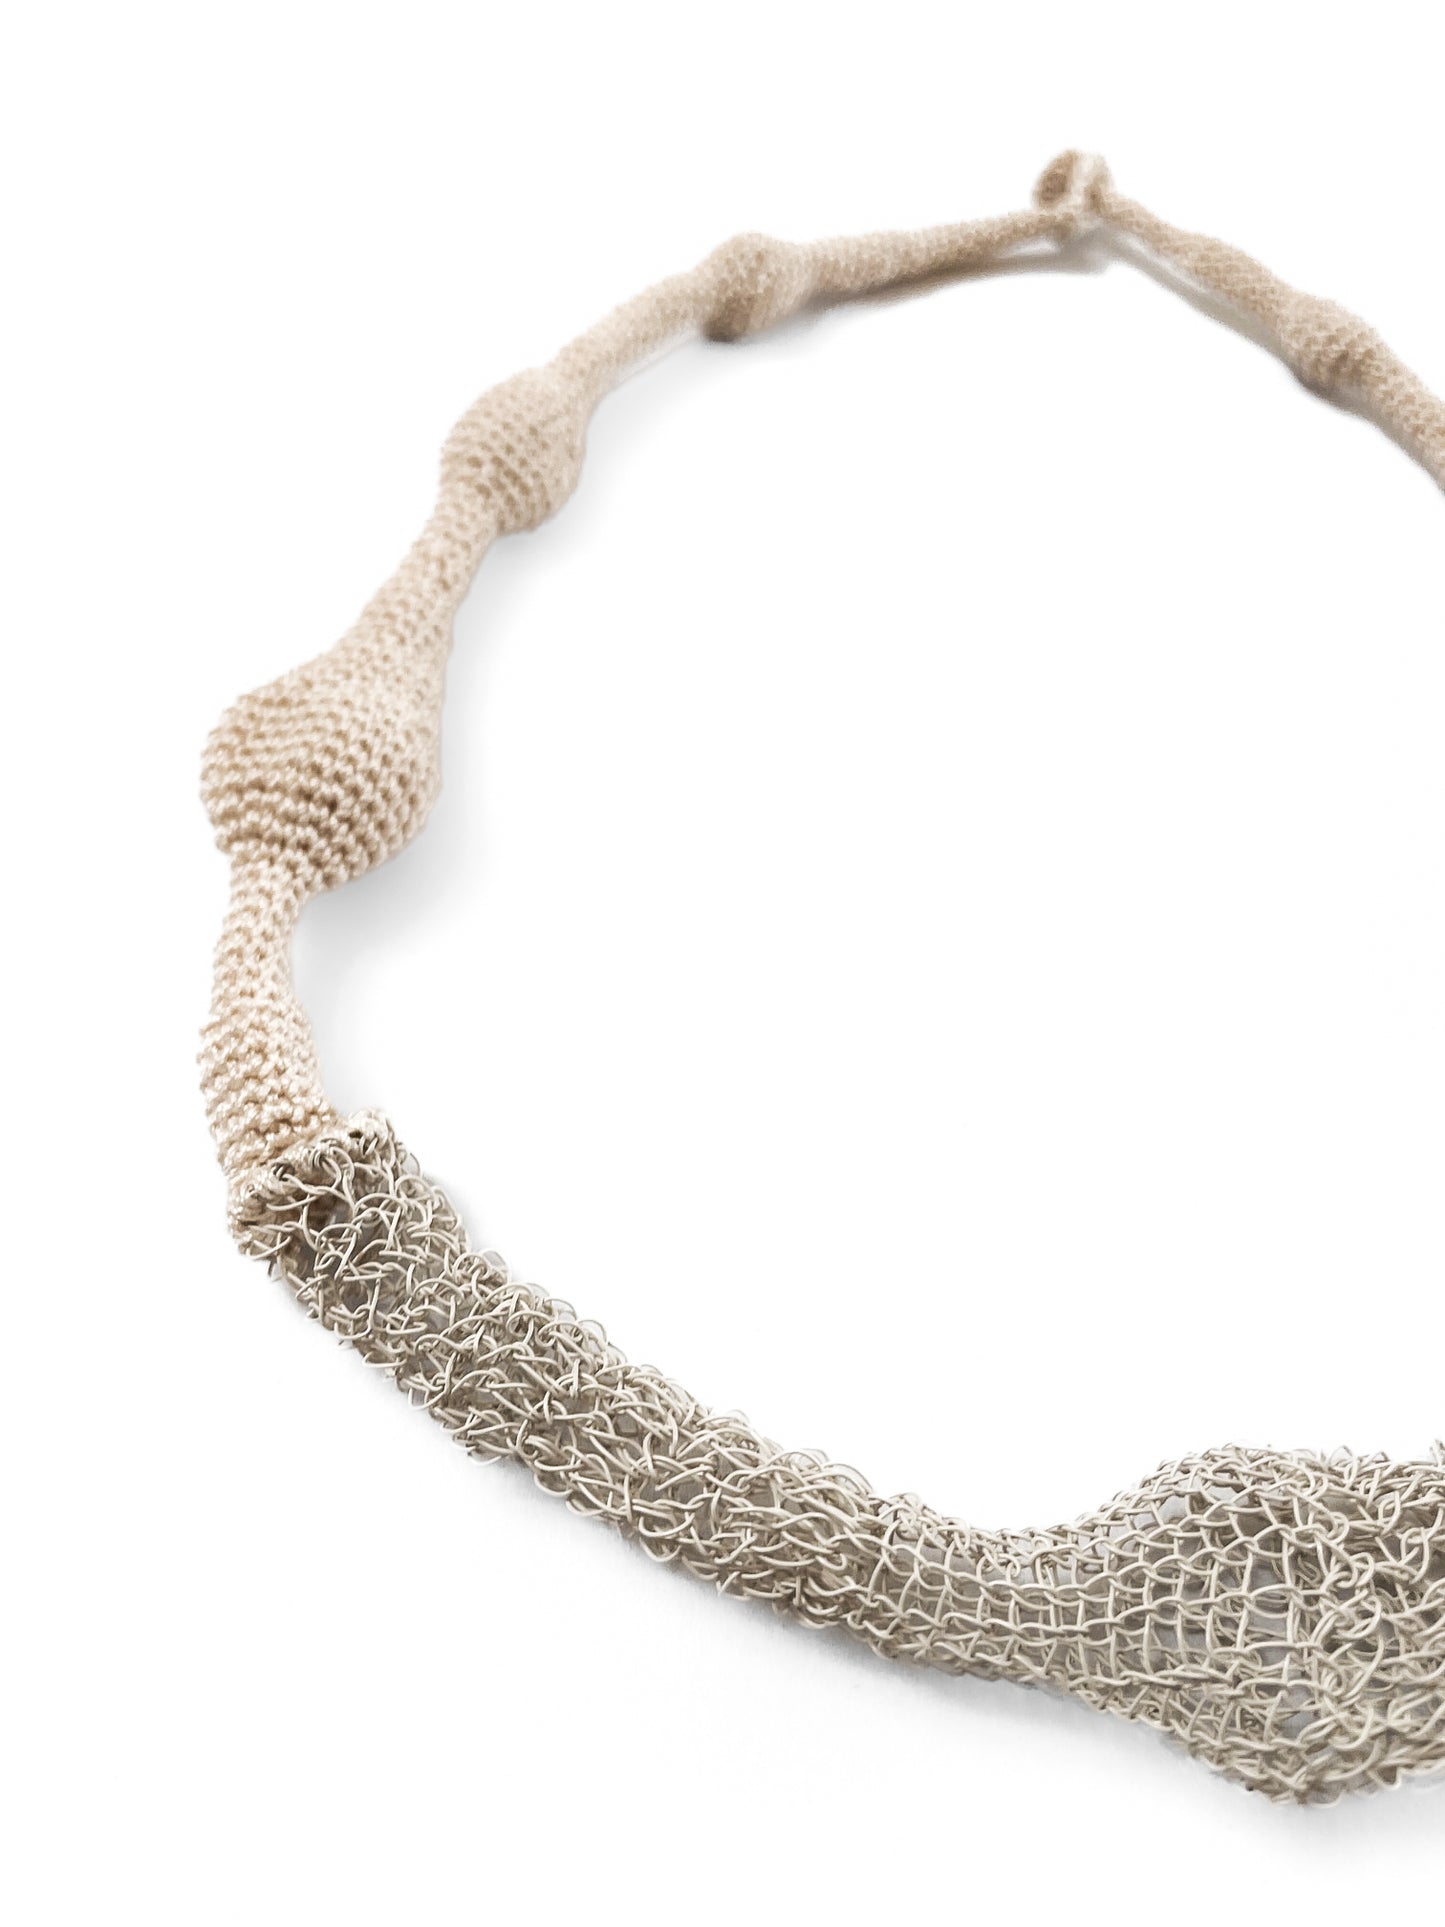 Cream Wave Necklace - Cotton & Metal